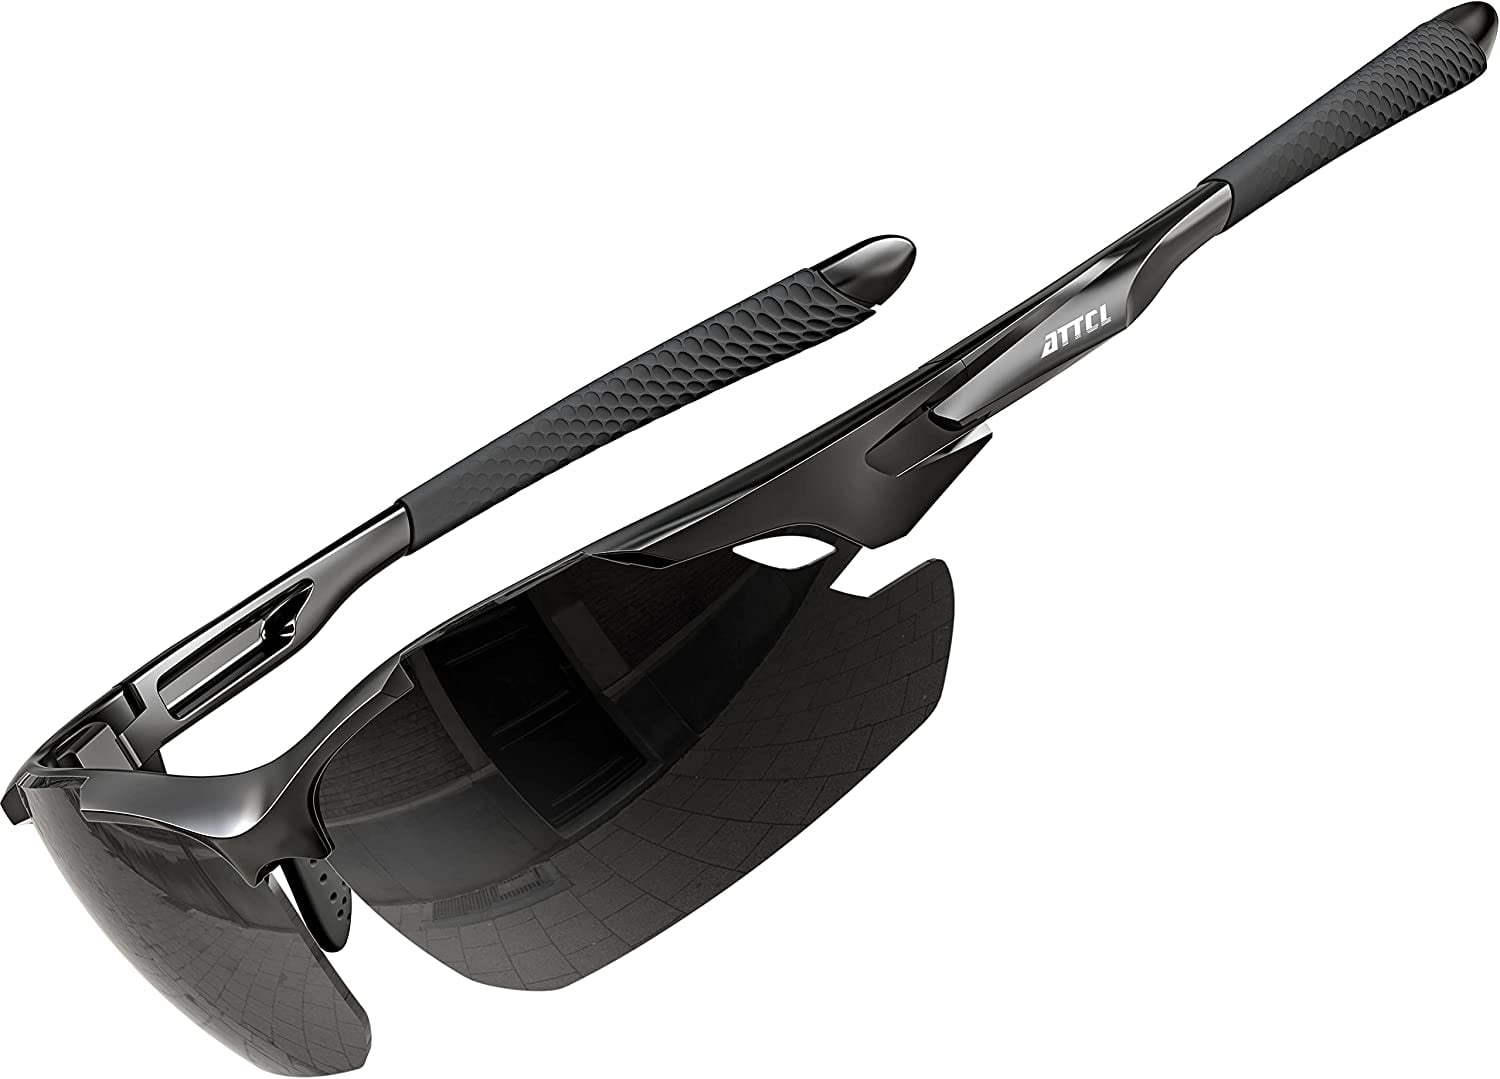 4Flaunt UV Protected Sports Sunglasses